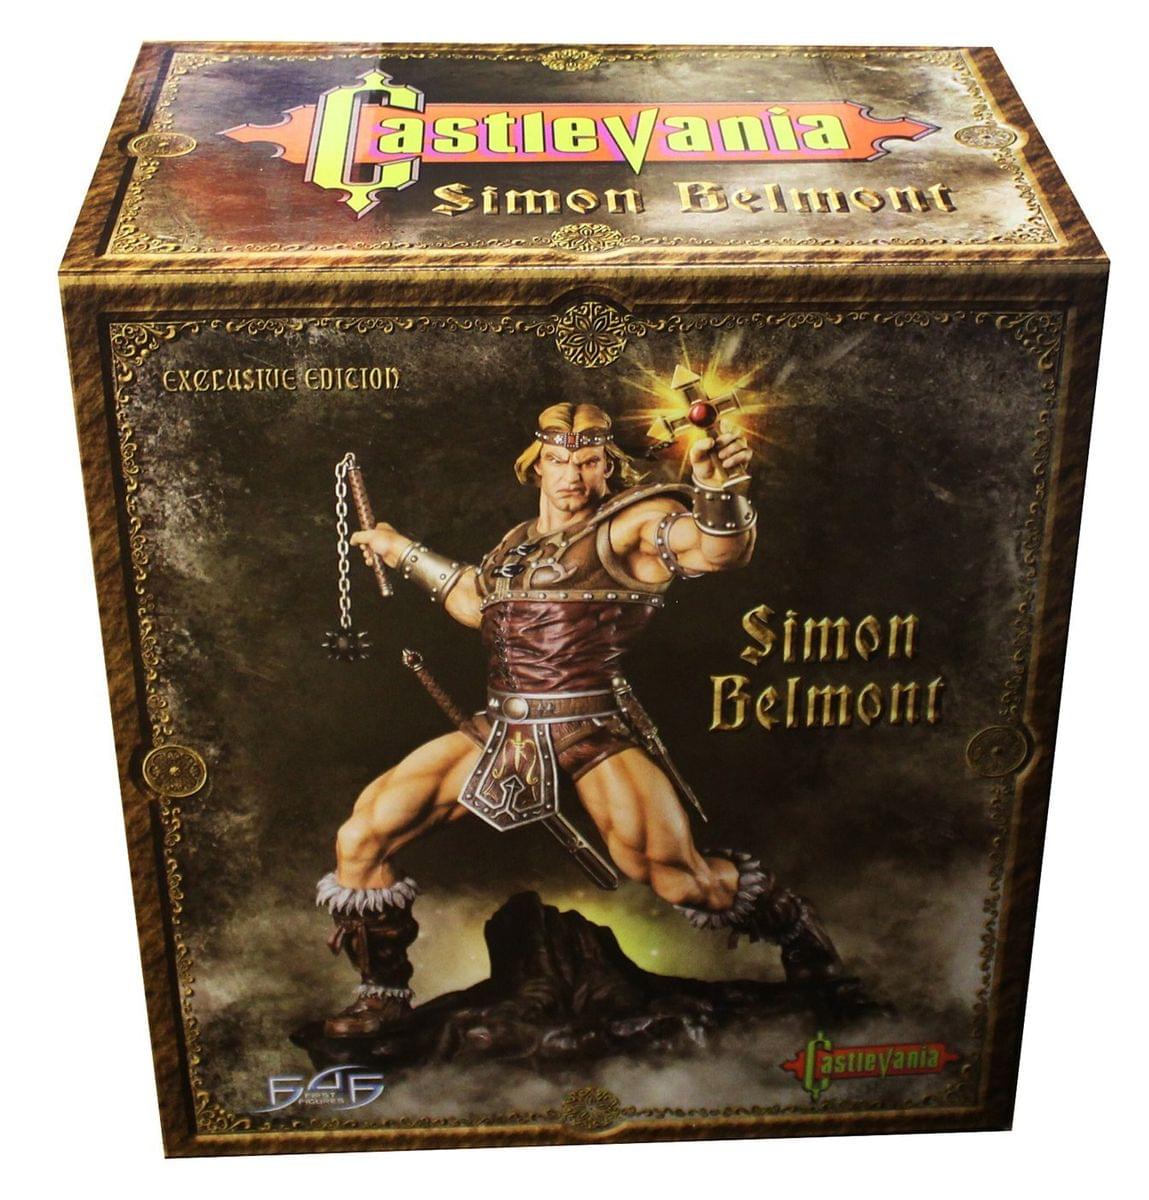 Castlevania: 20 Simon Belmont Statue Exclusive Edition